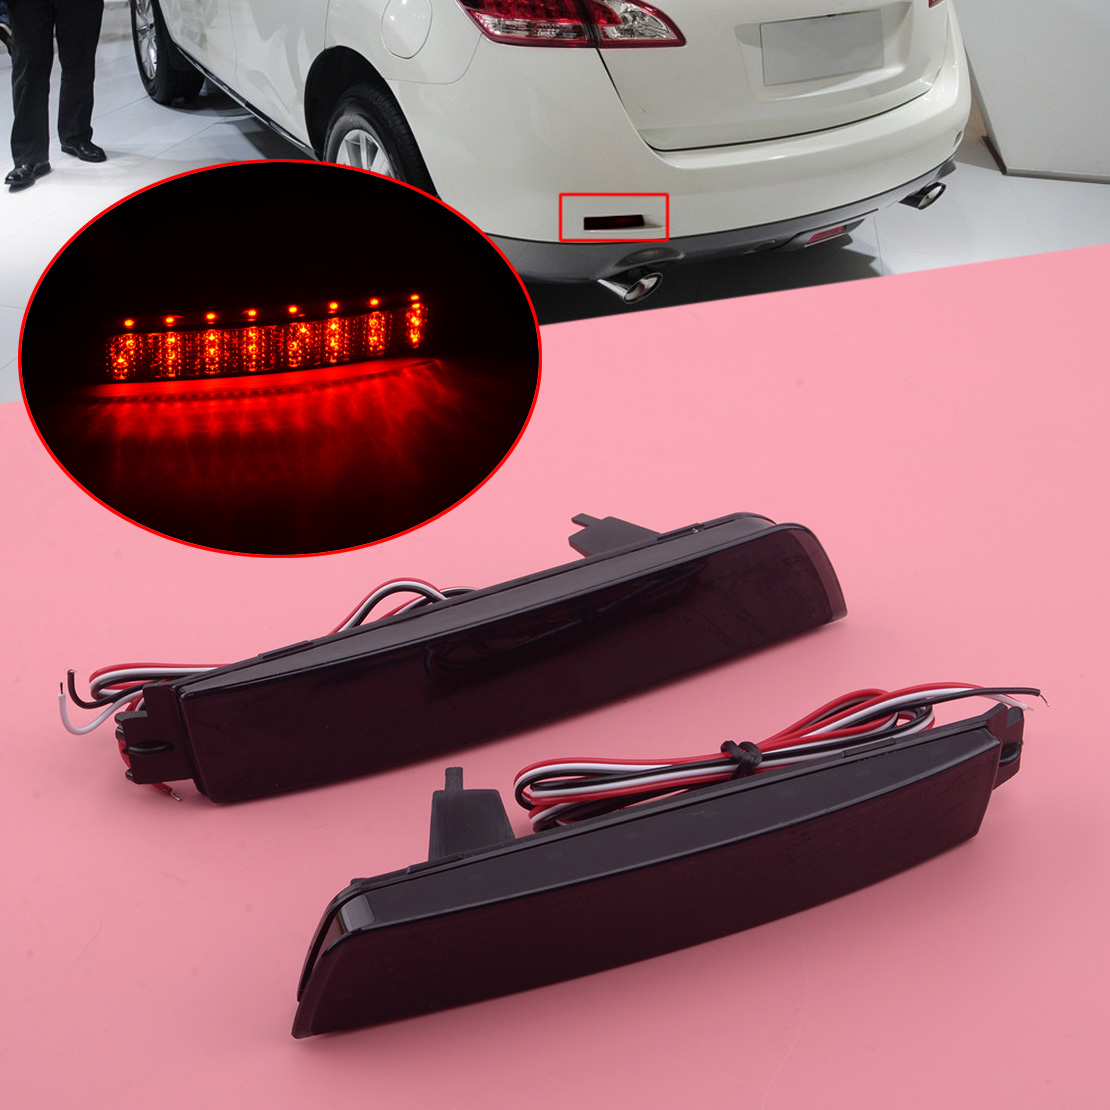 2x LED Rear Bumper Lamp Reflector Brake Tail Lights Fit For Nissan Murano Juke | eBay 2009 Nissan Murano Battery And Brake Light On